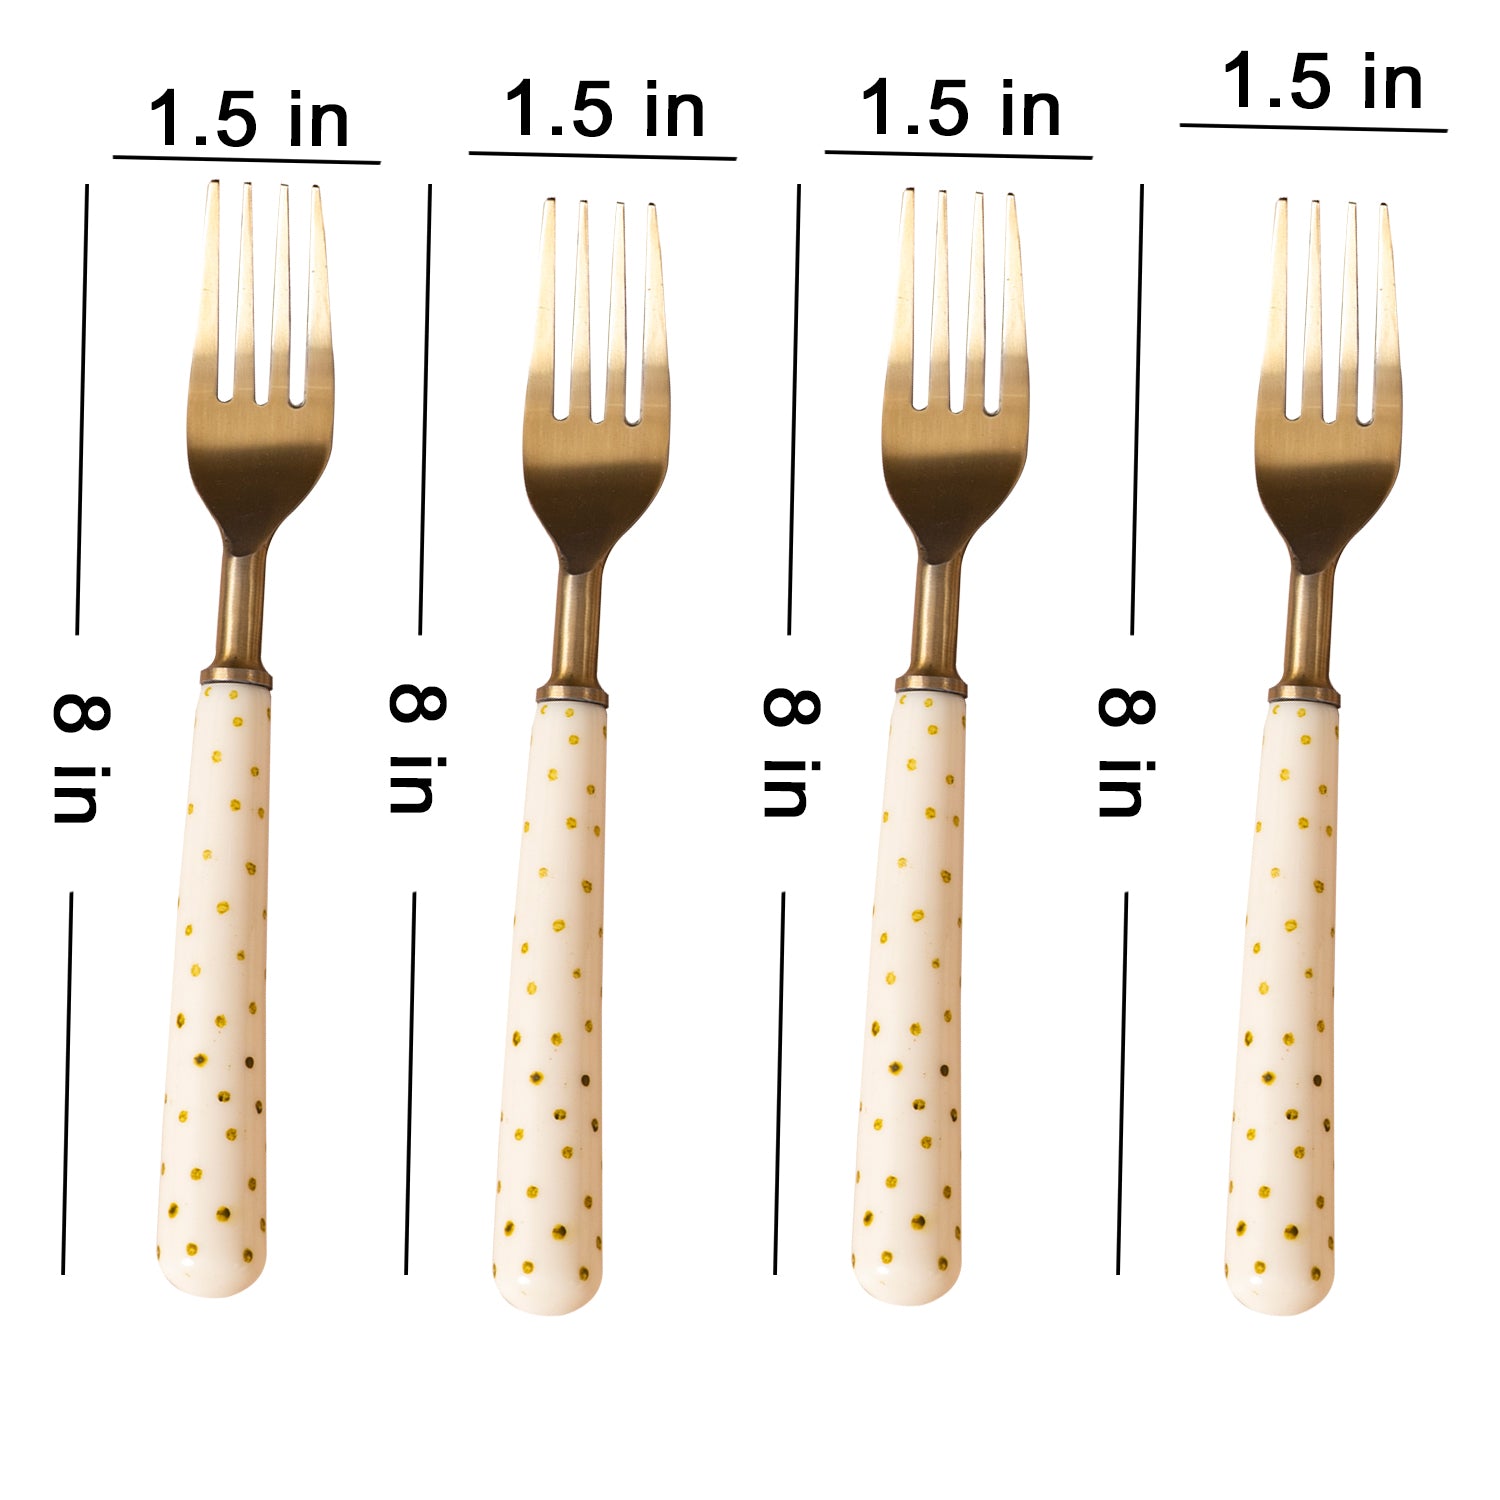 stylish cutlery set